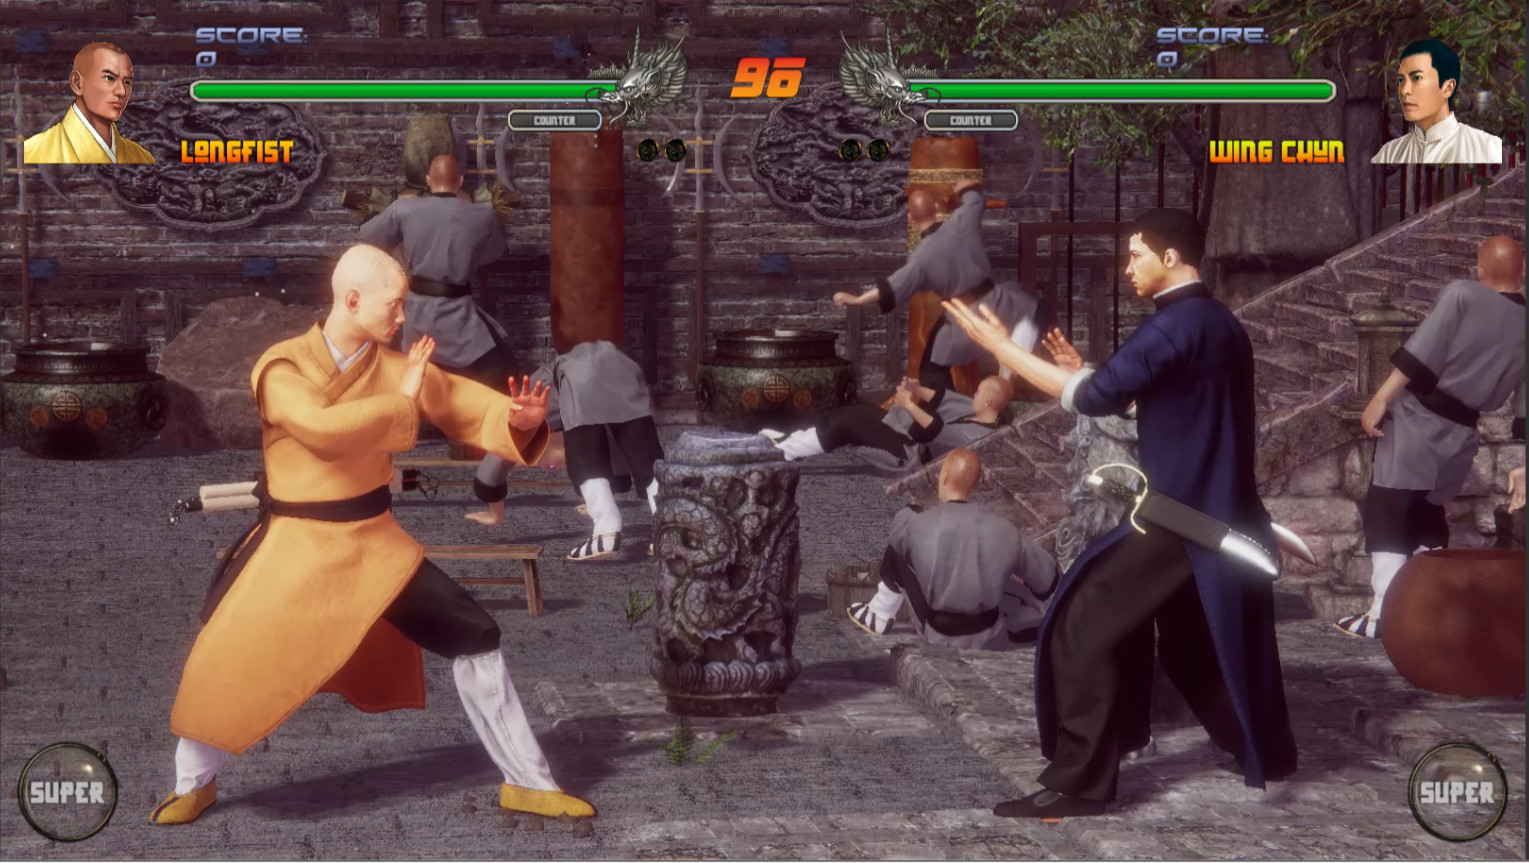 Shaolin vs Wutang 2 Free Download